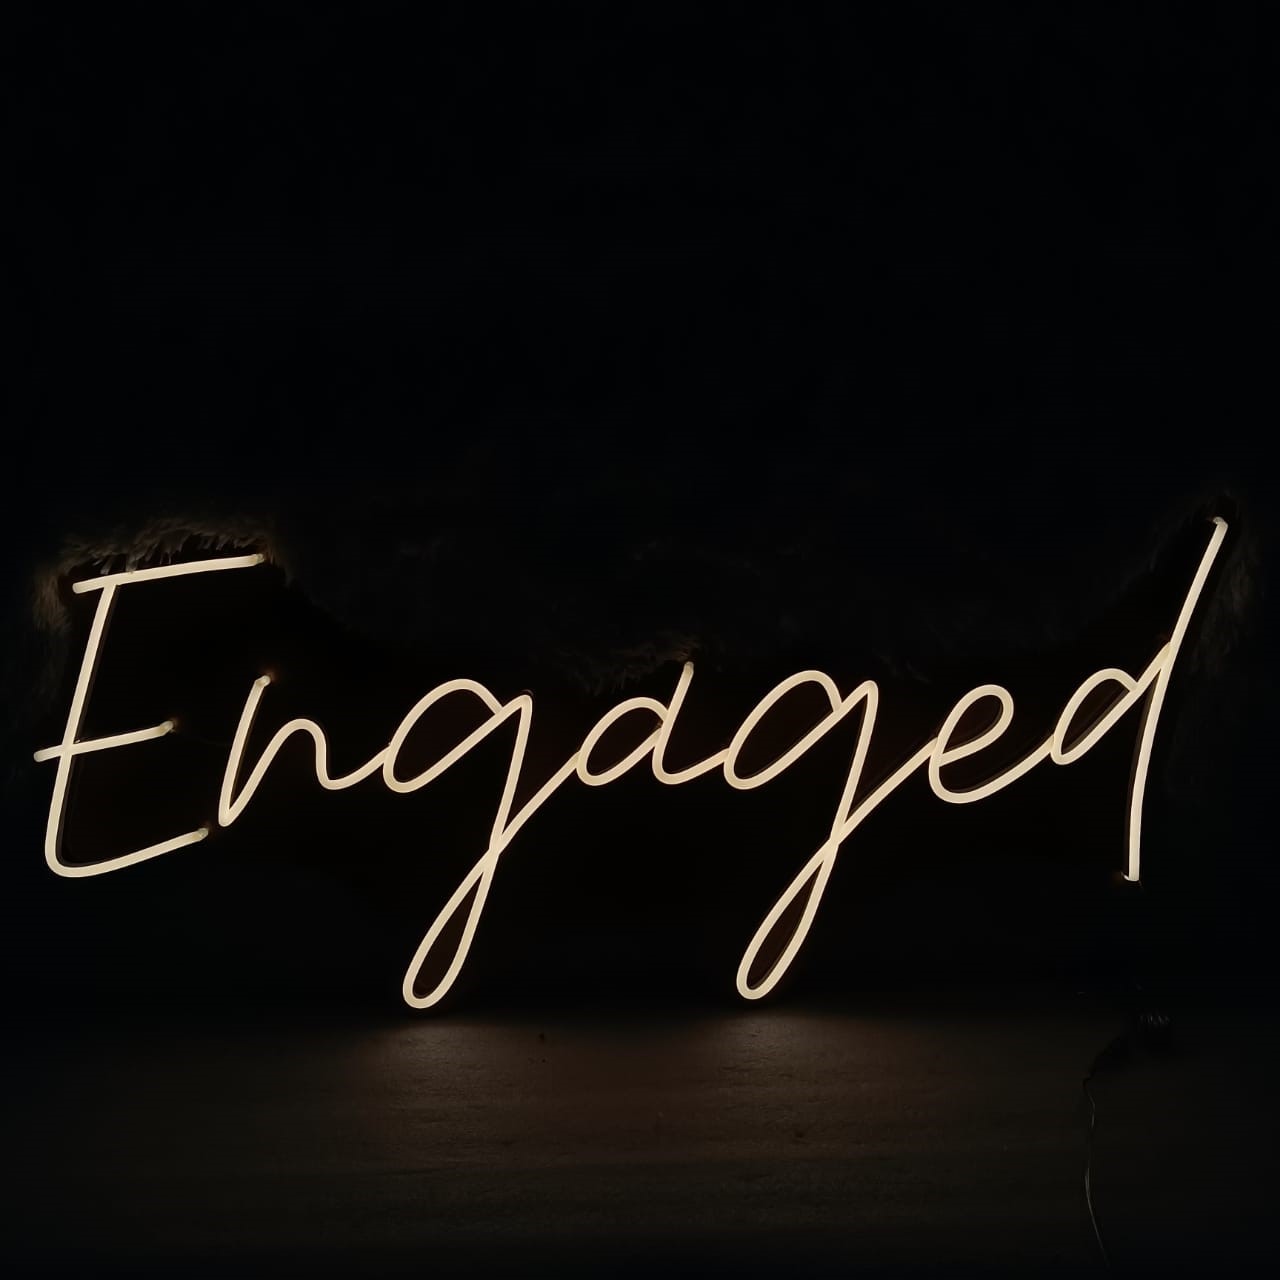 engaged neon